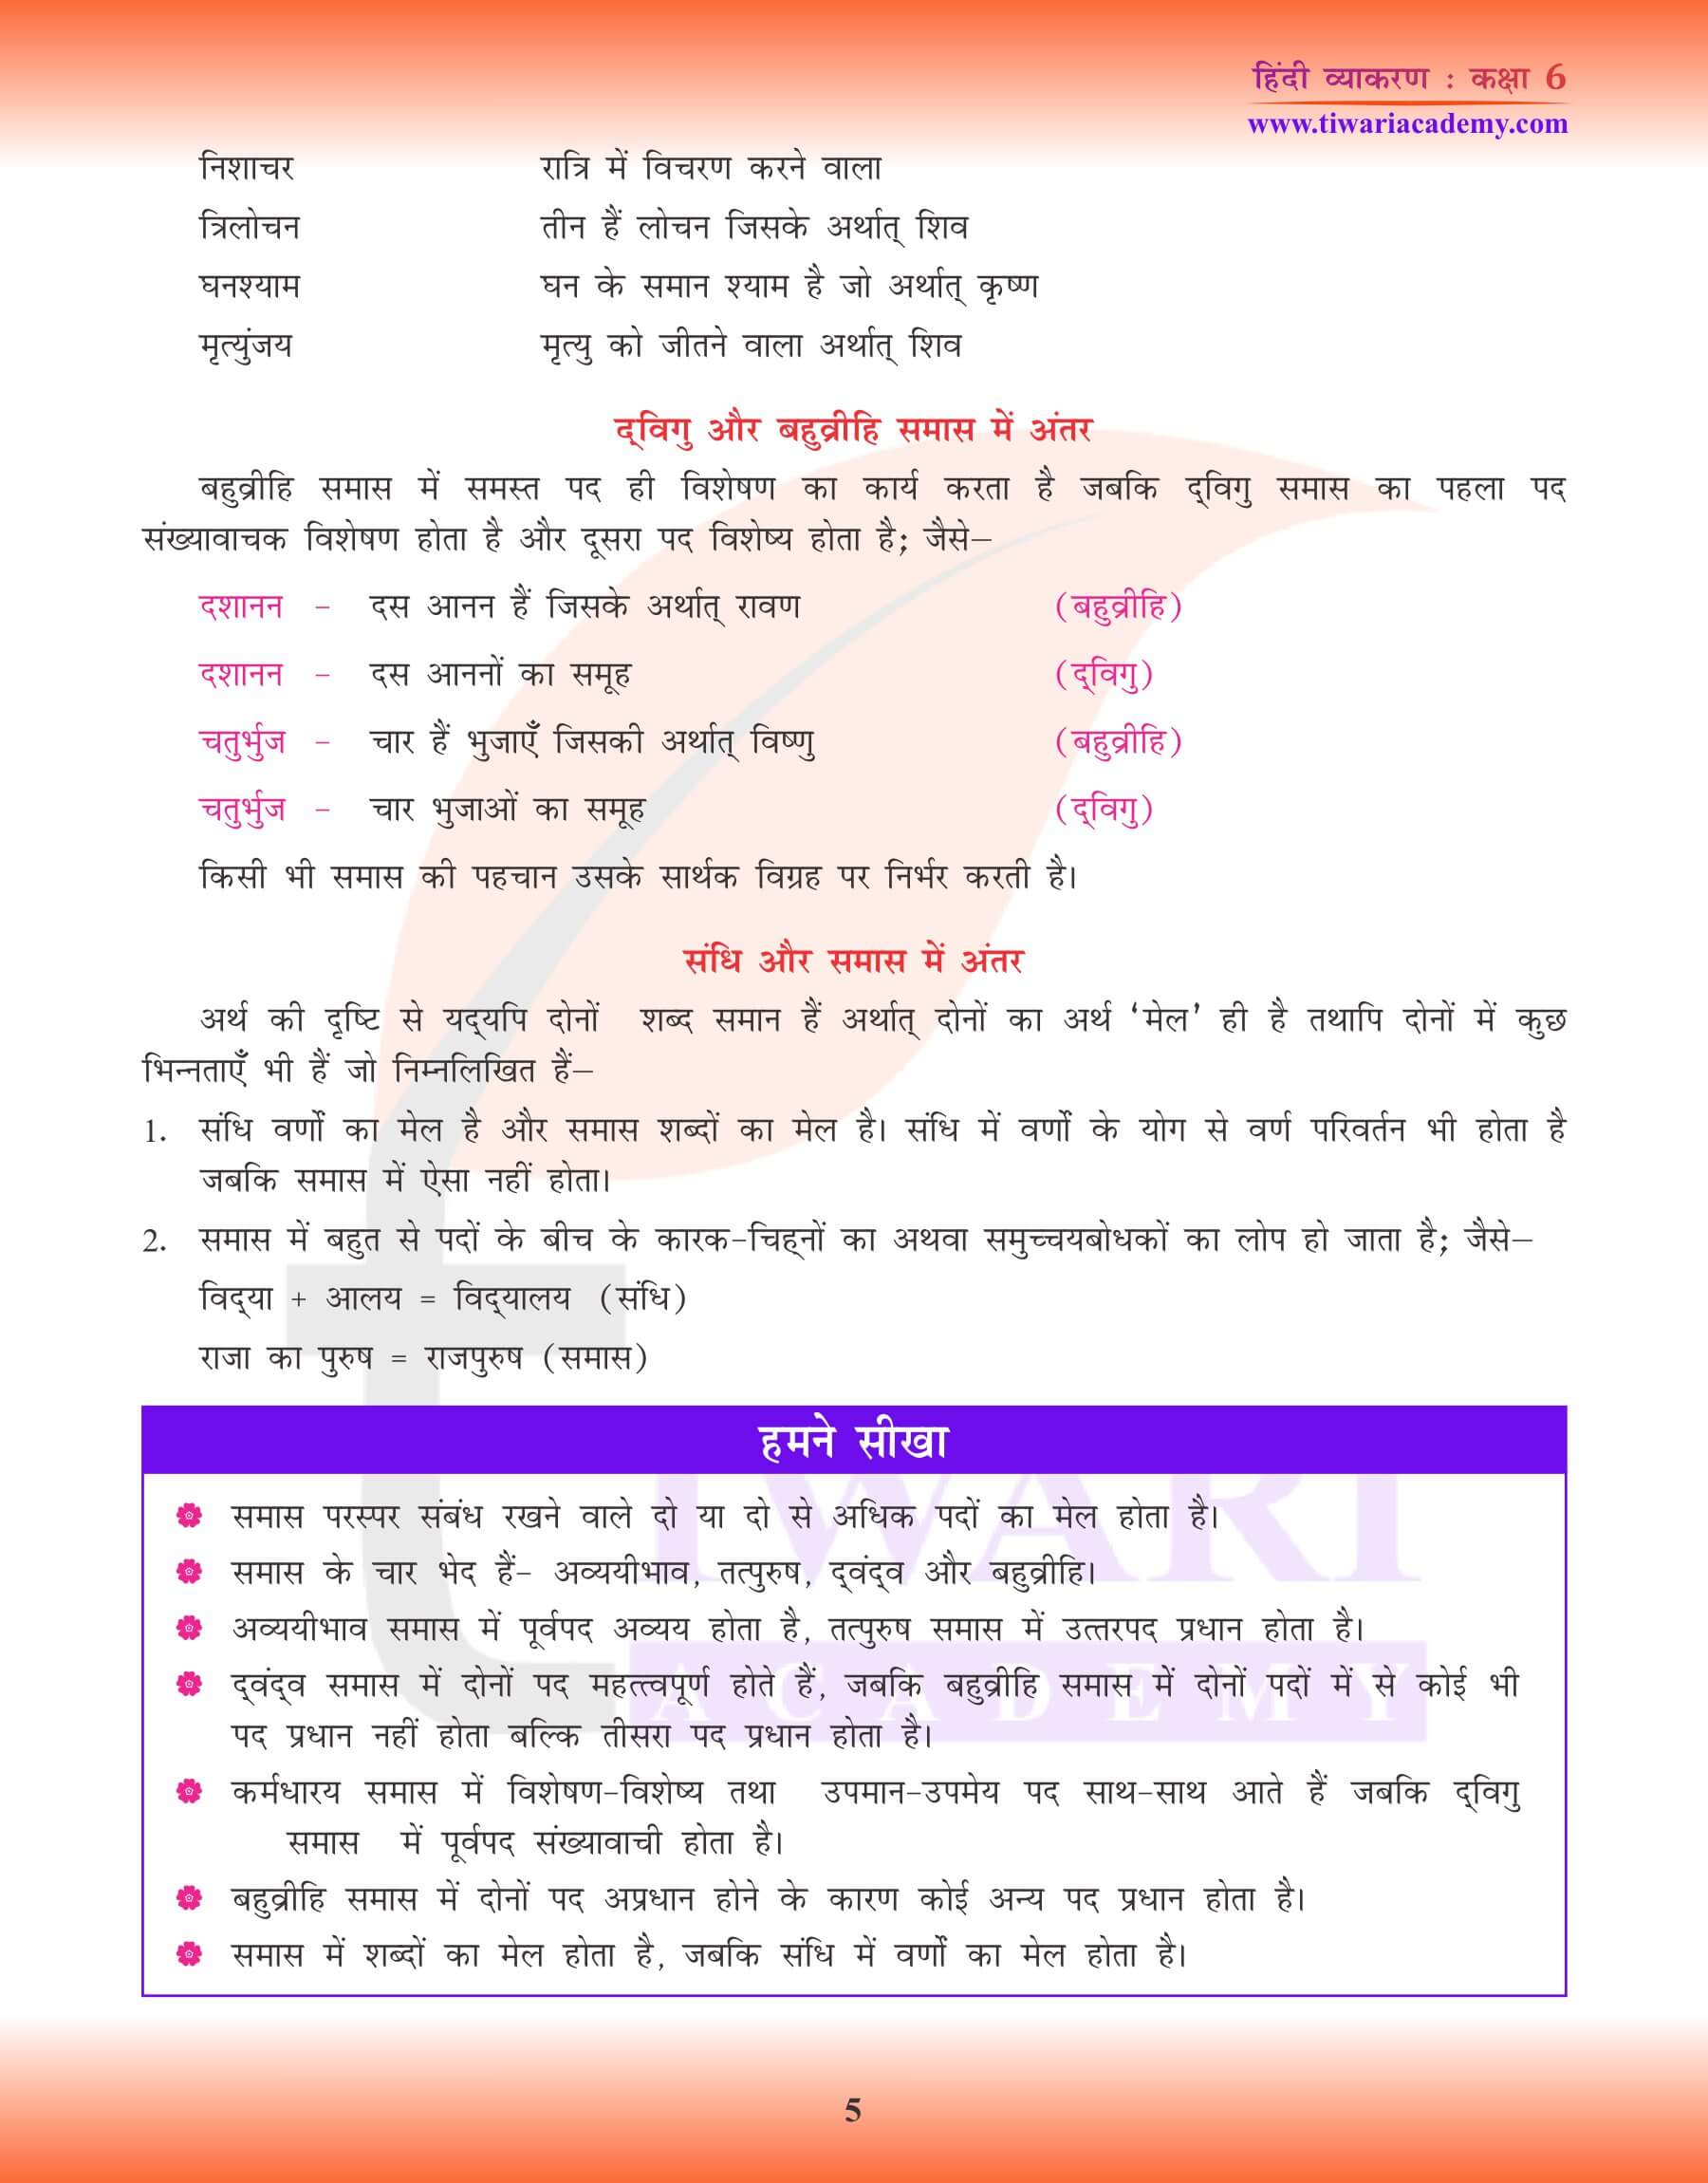 कक्षा 6 हिंदी व्याकरण समास के उदाहरण